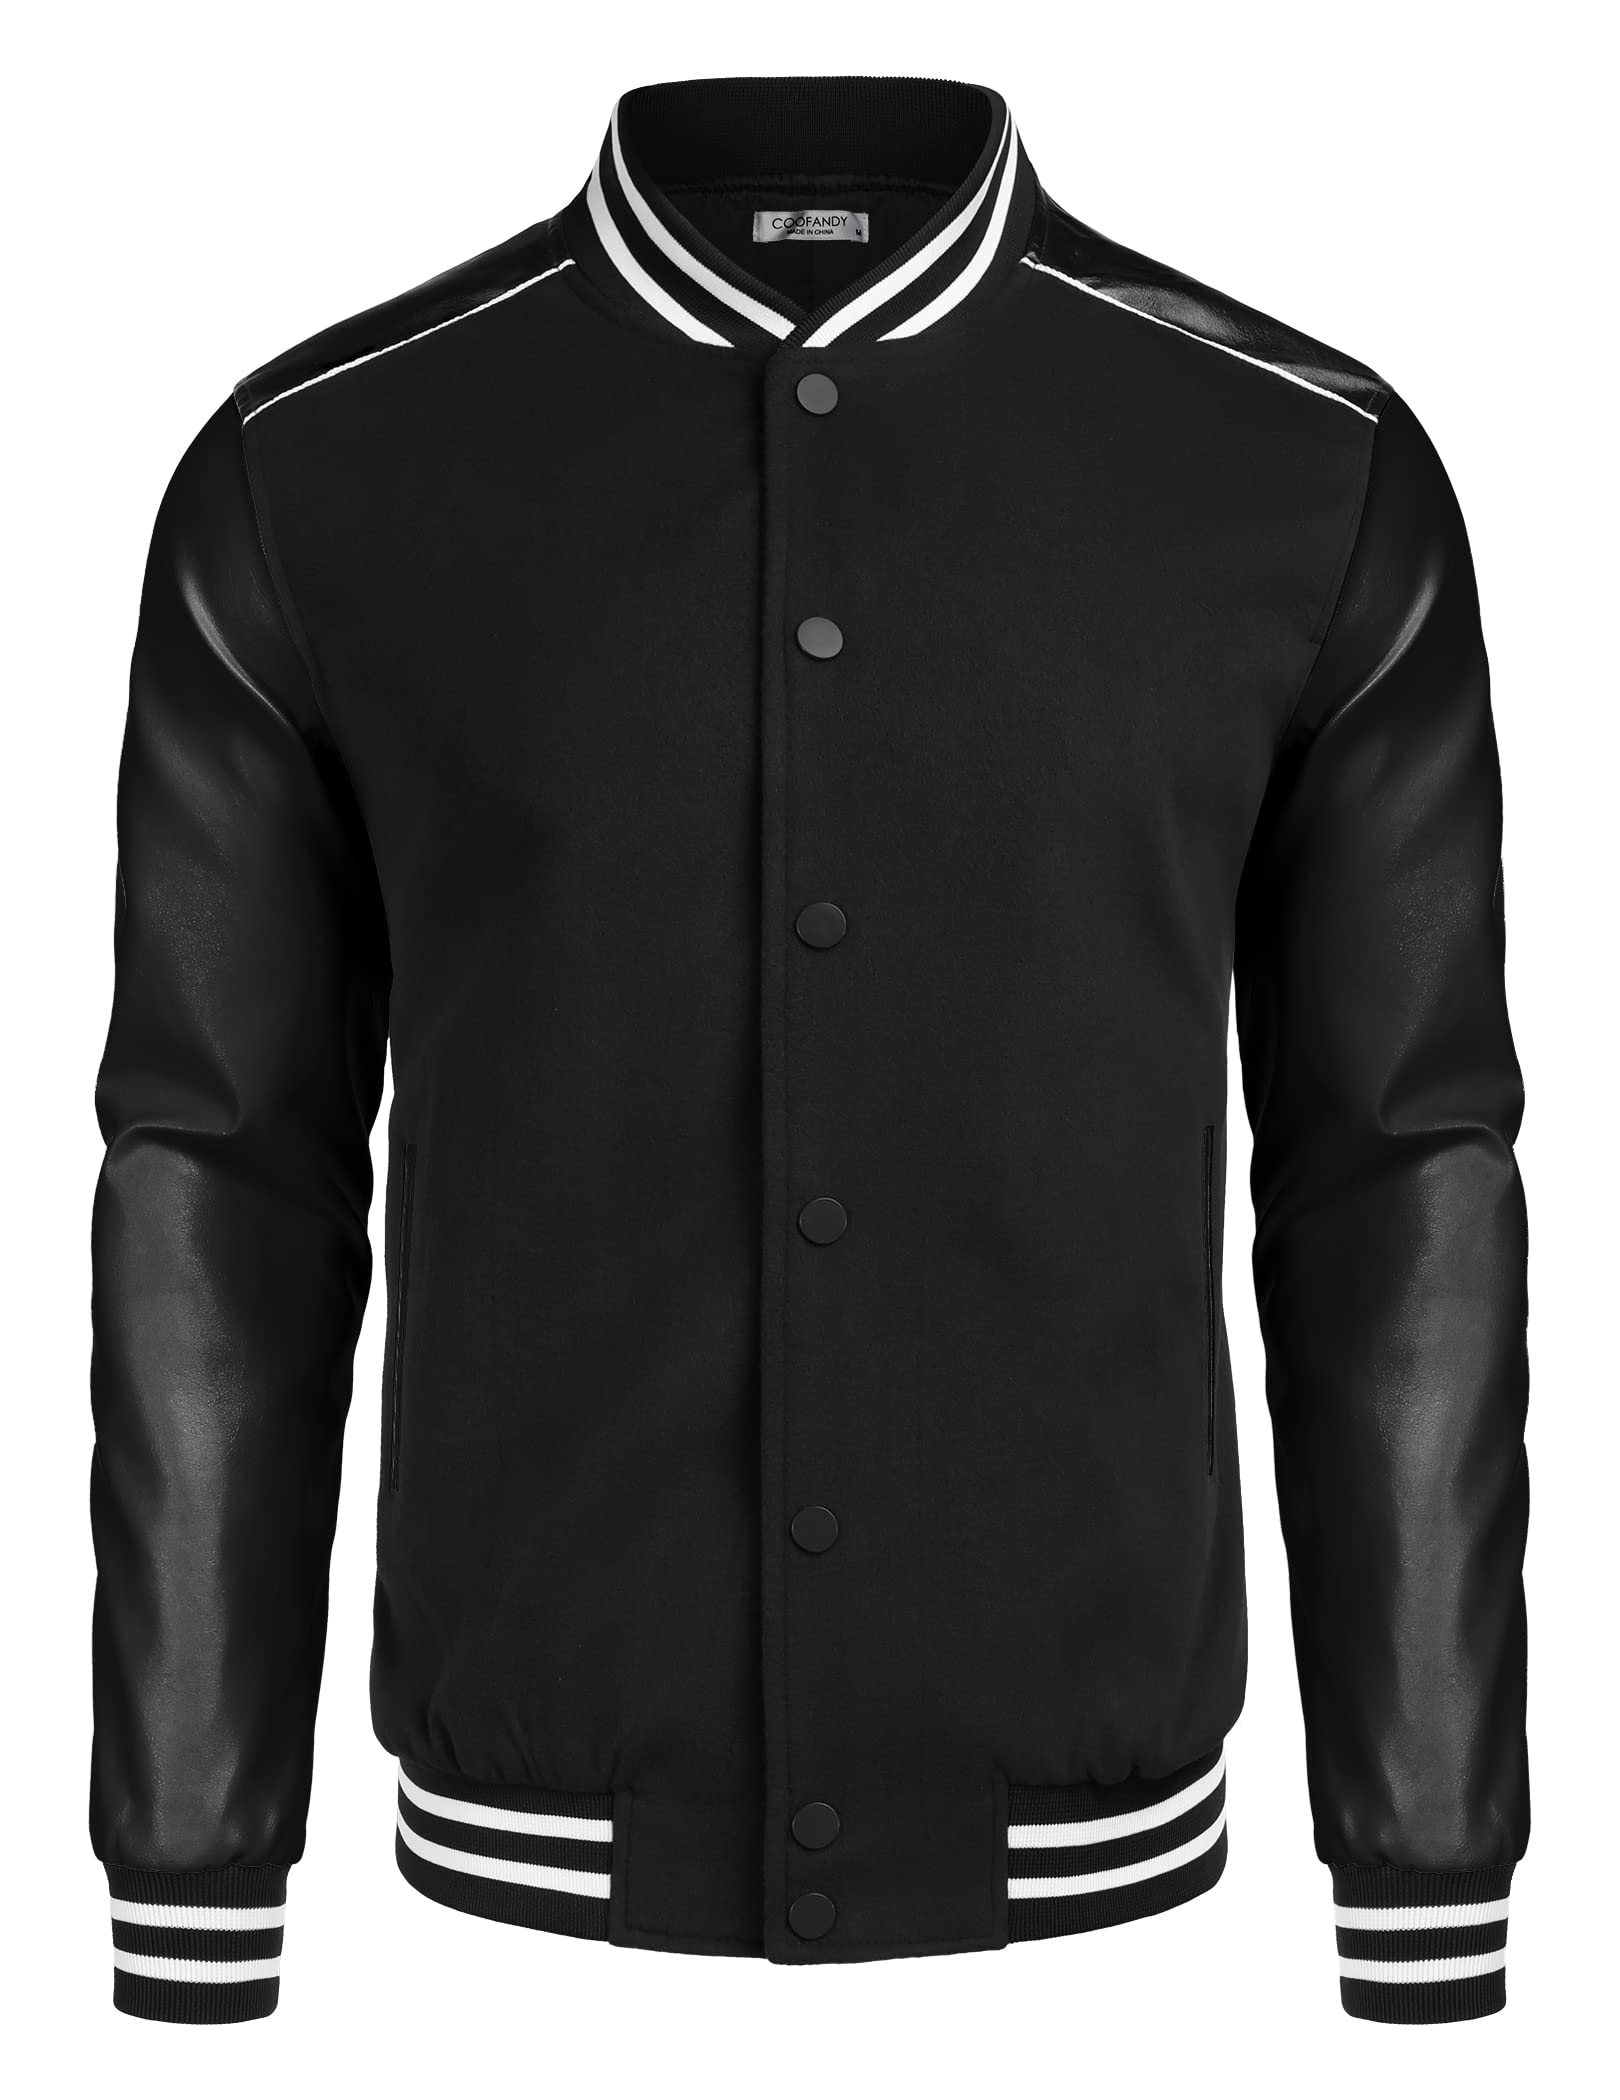 COOFANDY Mens Varsity Jacket Casual Leather Sleeve Baseball Letterman Bomber Jacket Coat